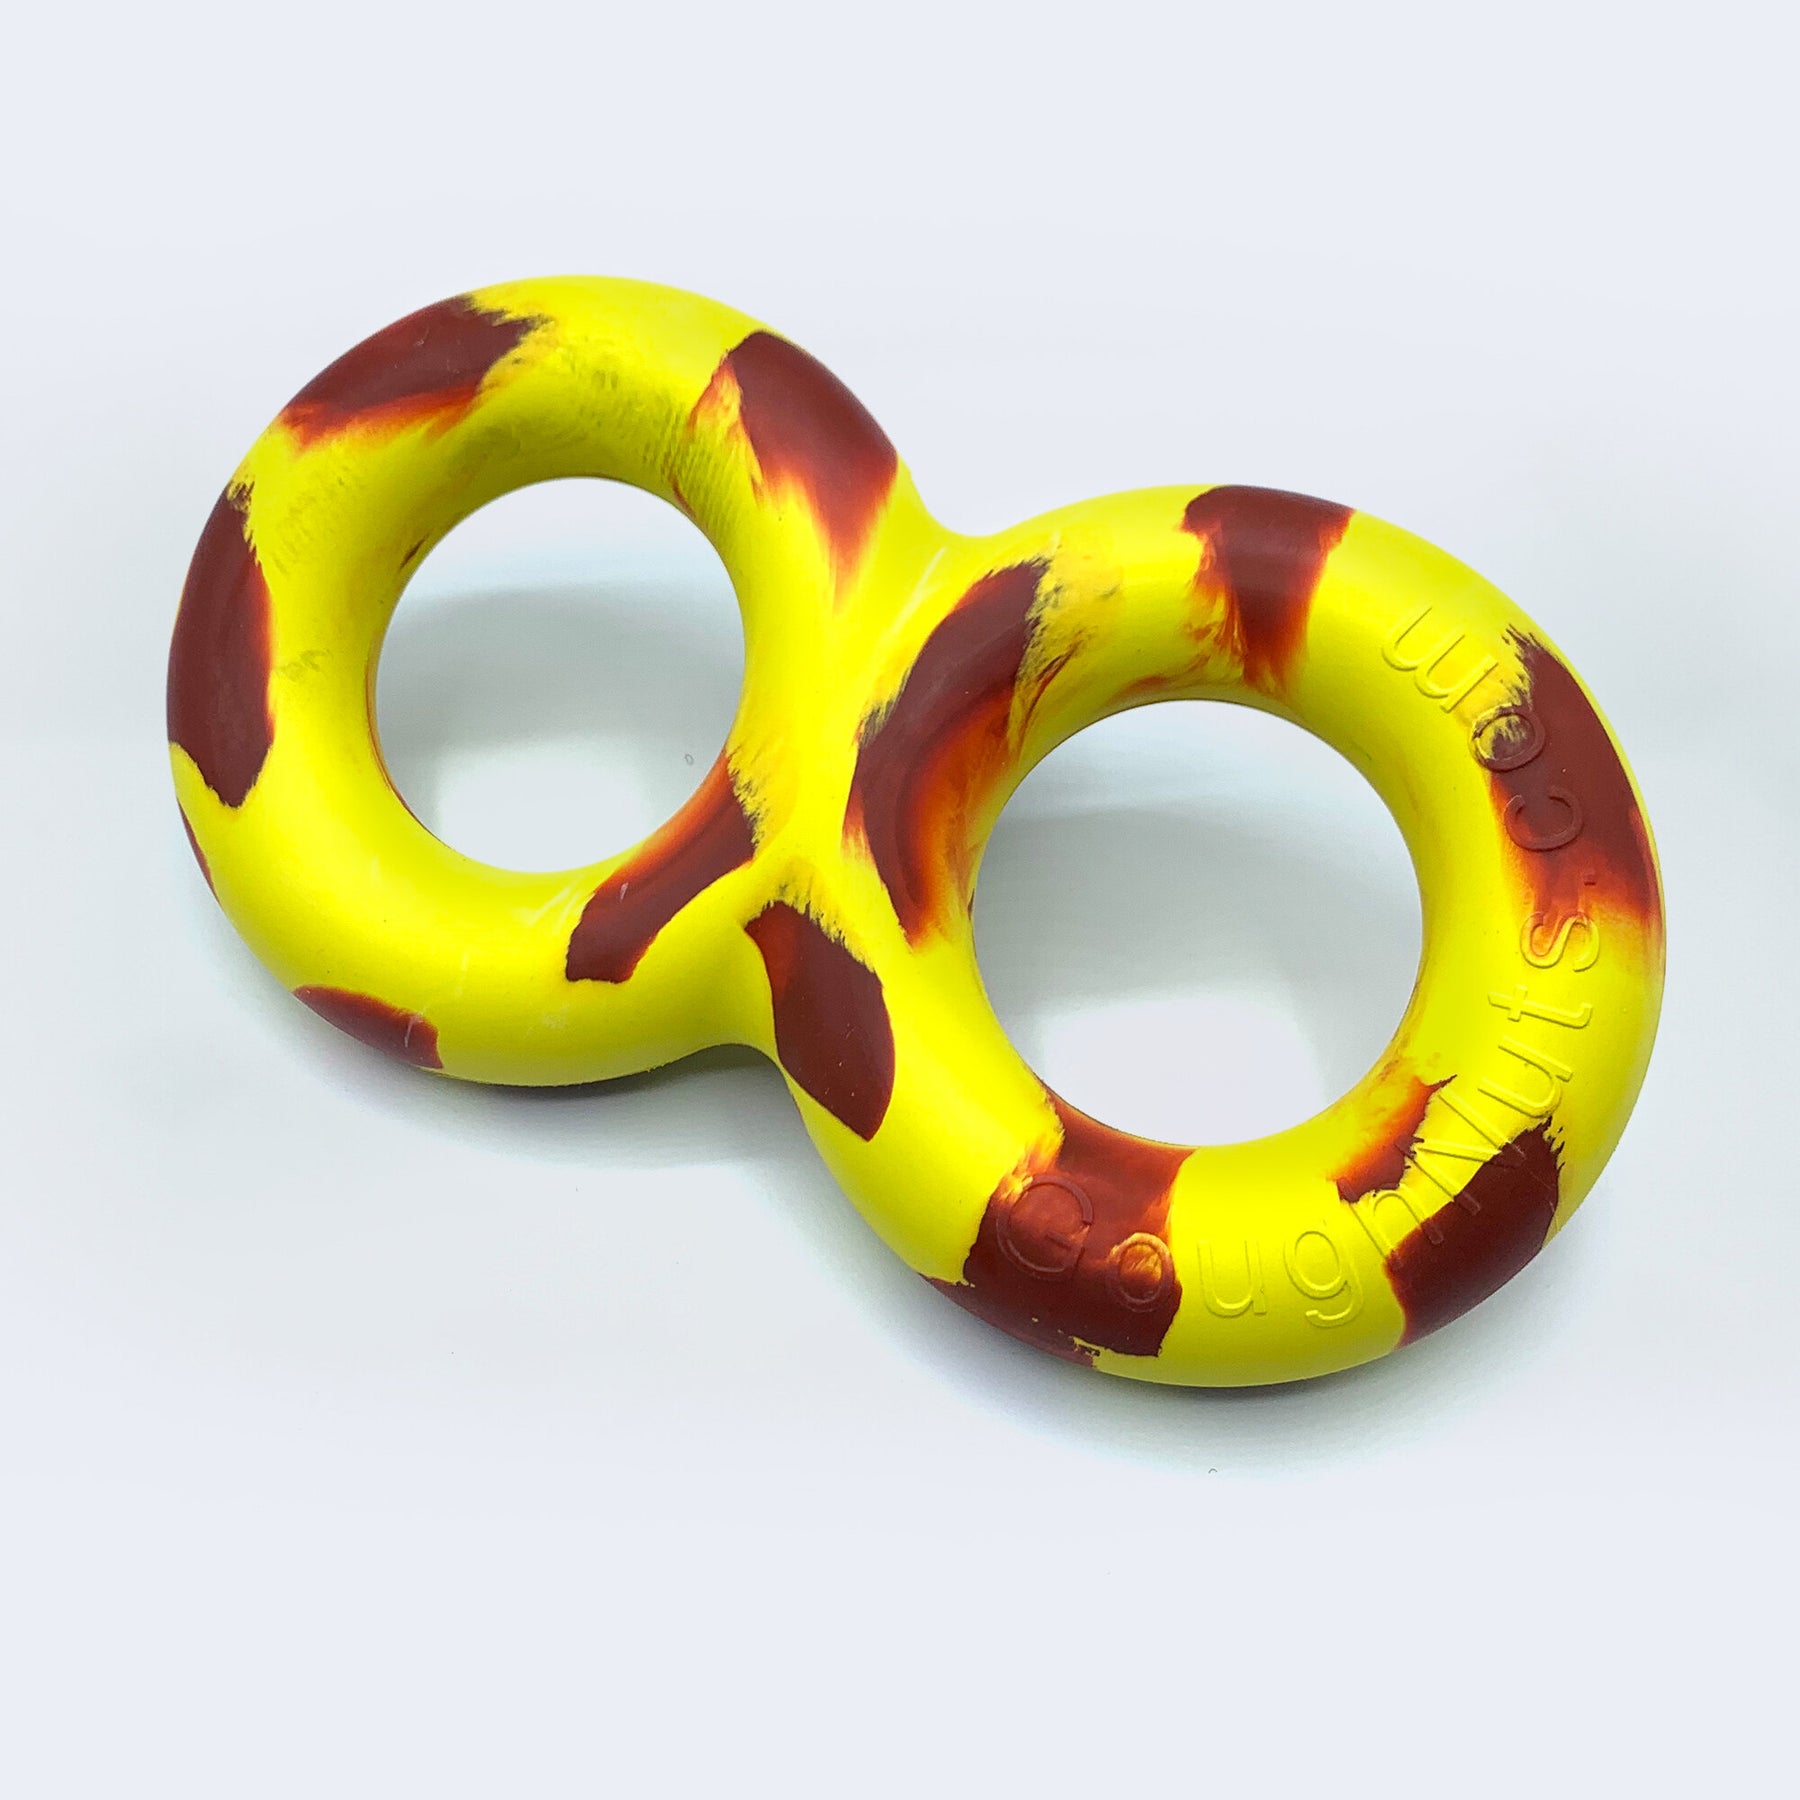 [Goughnuts] - Tug Extreme Chewer Toy